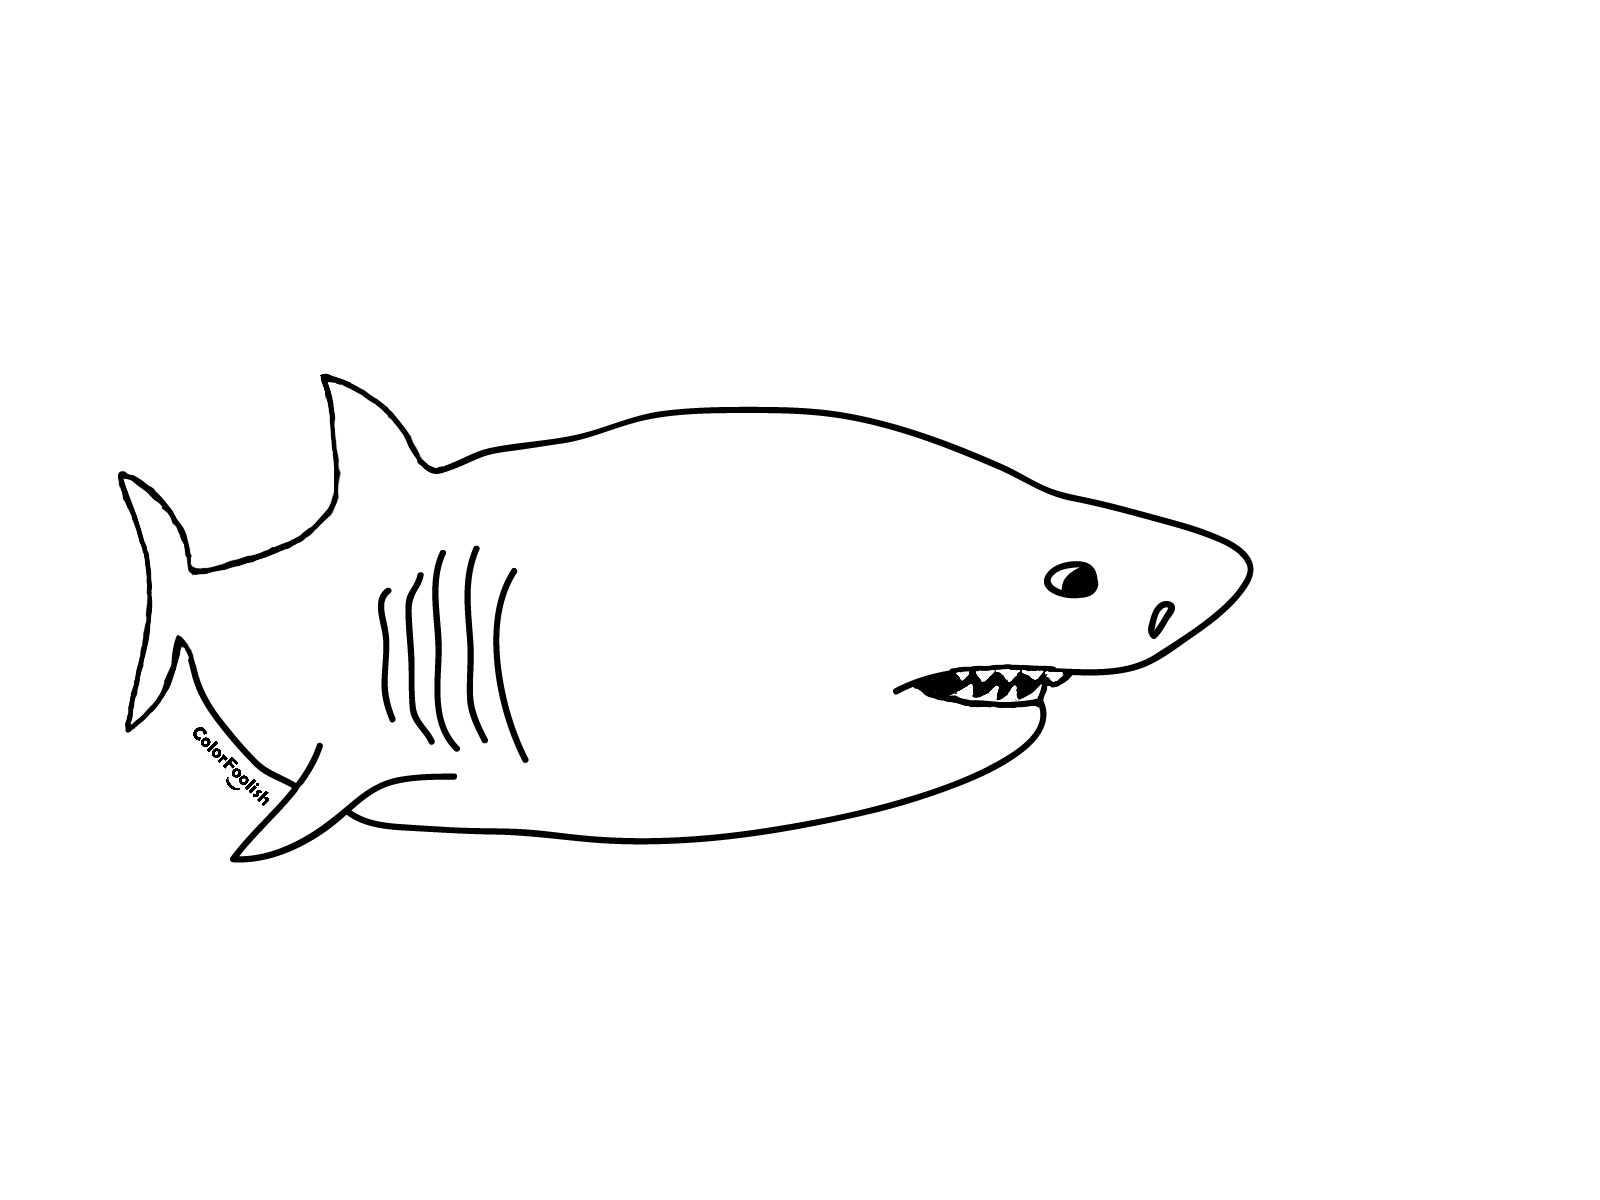 Kaca pewarna hiu putih sing apik